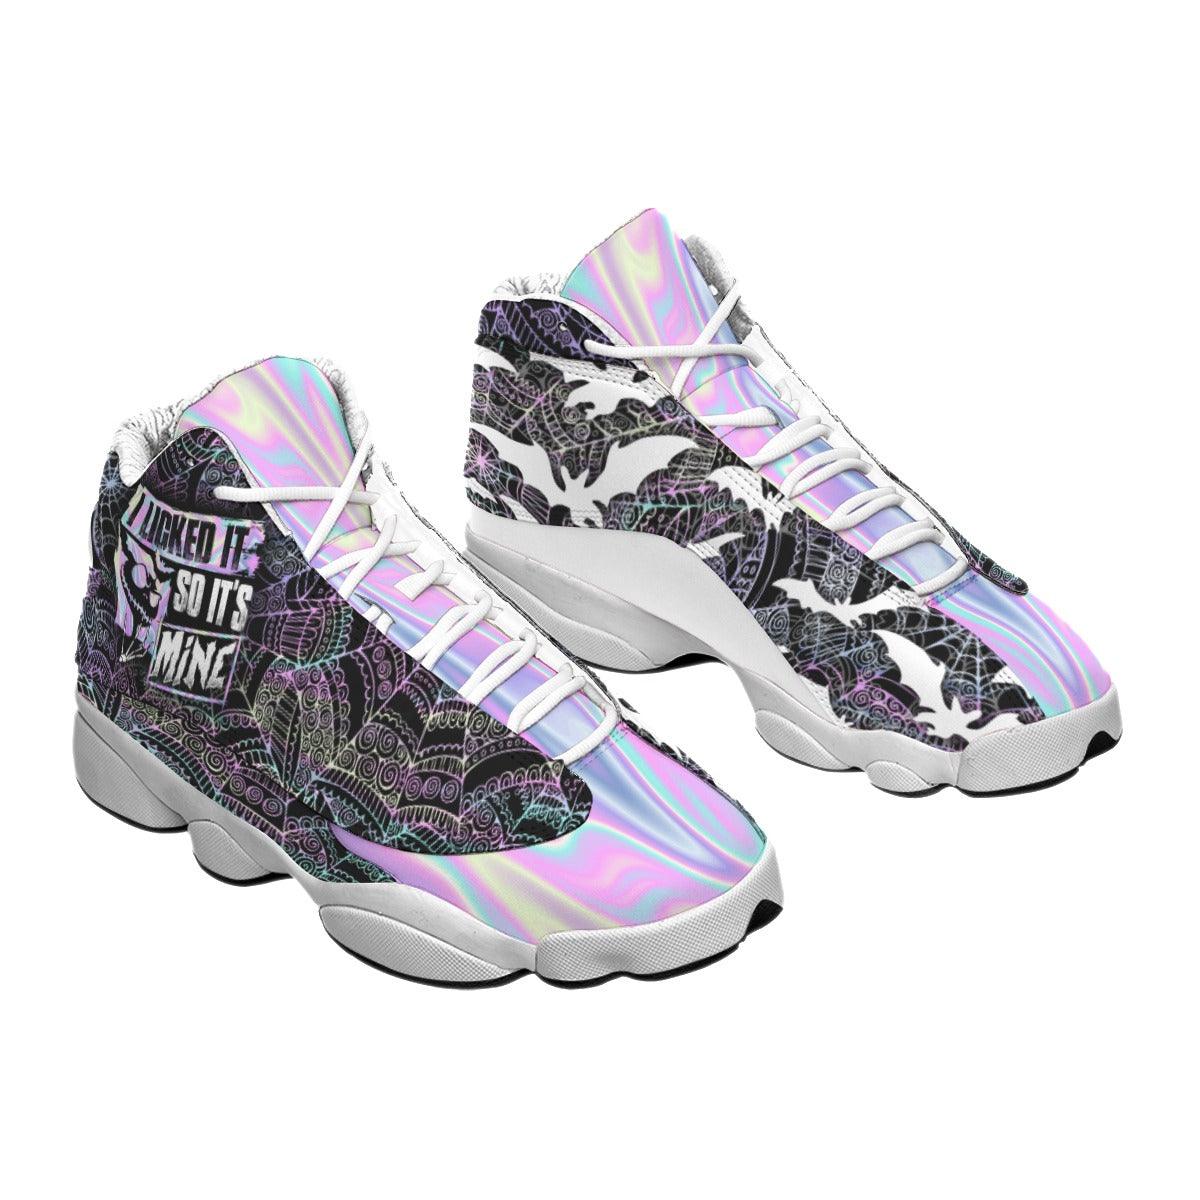 Nightmare Hologram Funny Women's Curved Basketball Shoes Sneaker - Wonder Skull